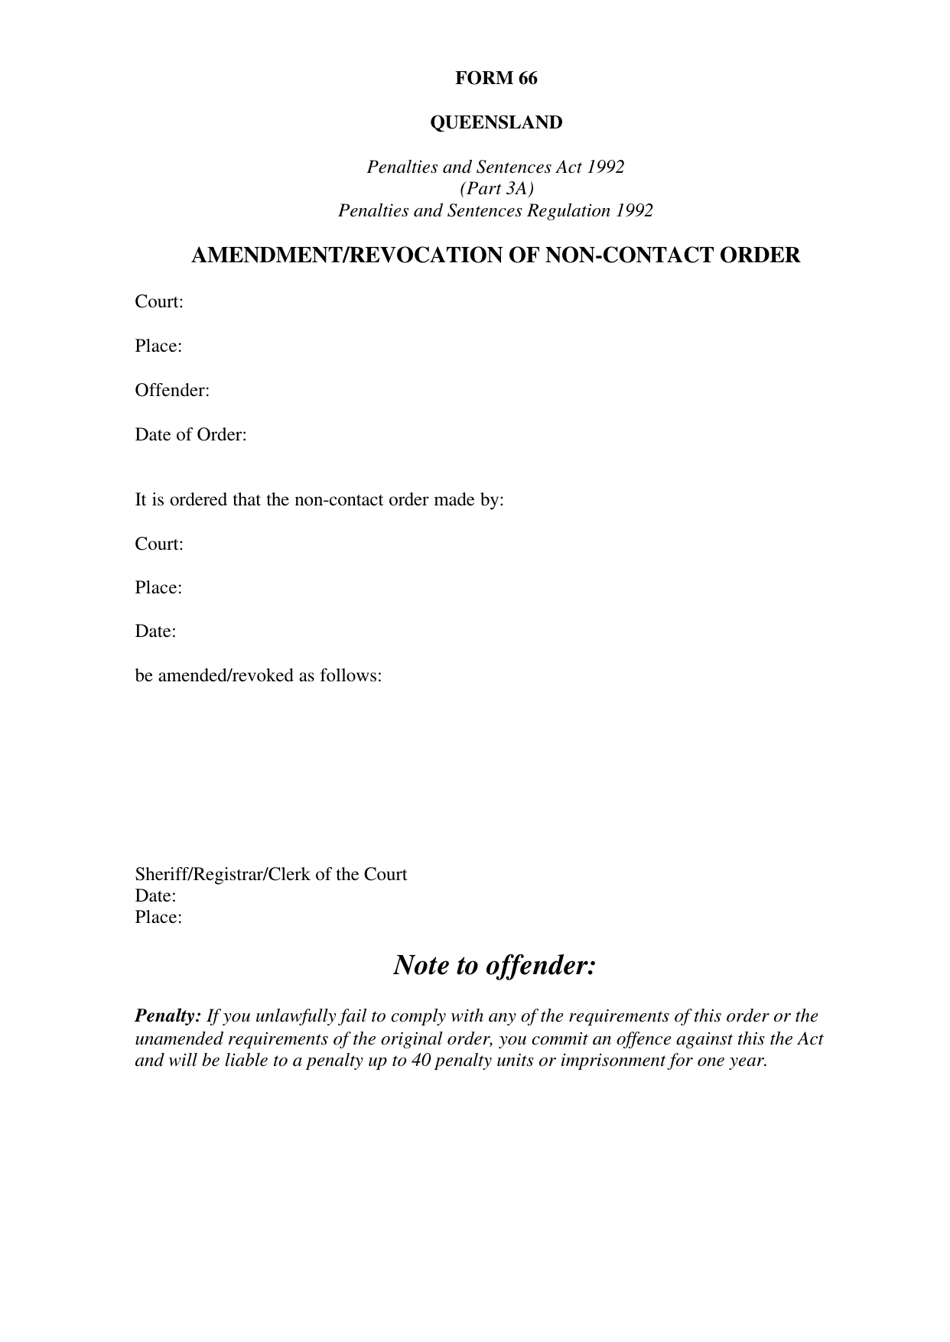 Form 66 Amendment / Revocation of Non-contact Order - Queensland, Australia, Page 1